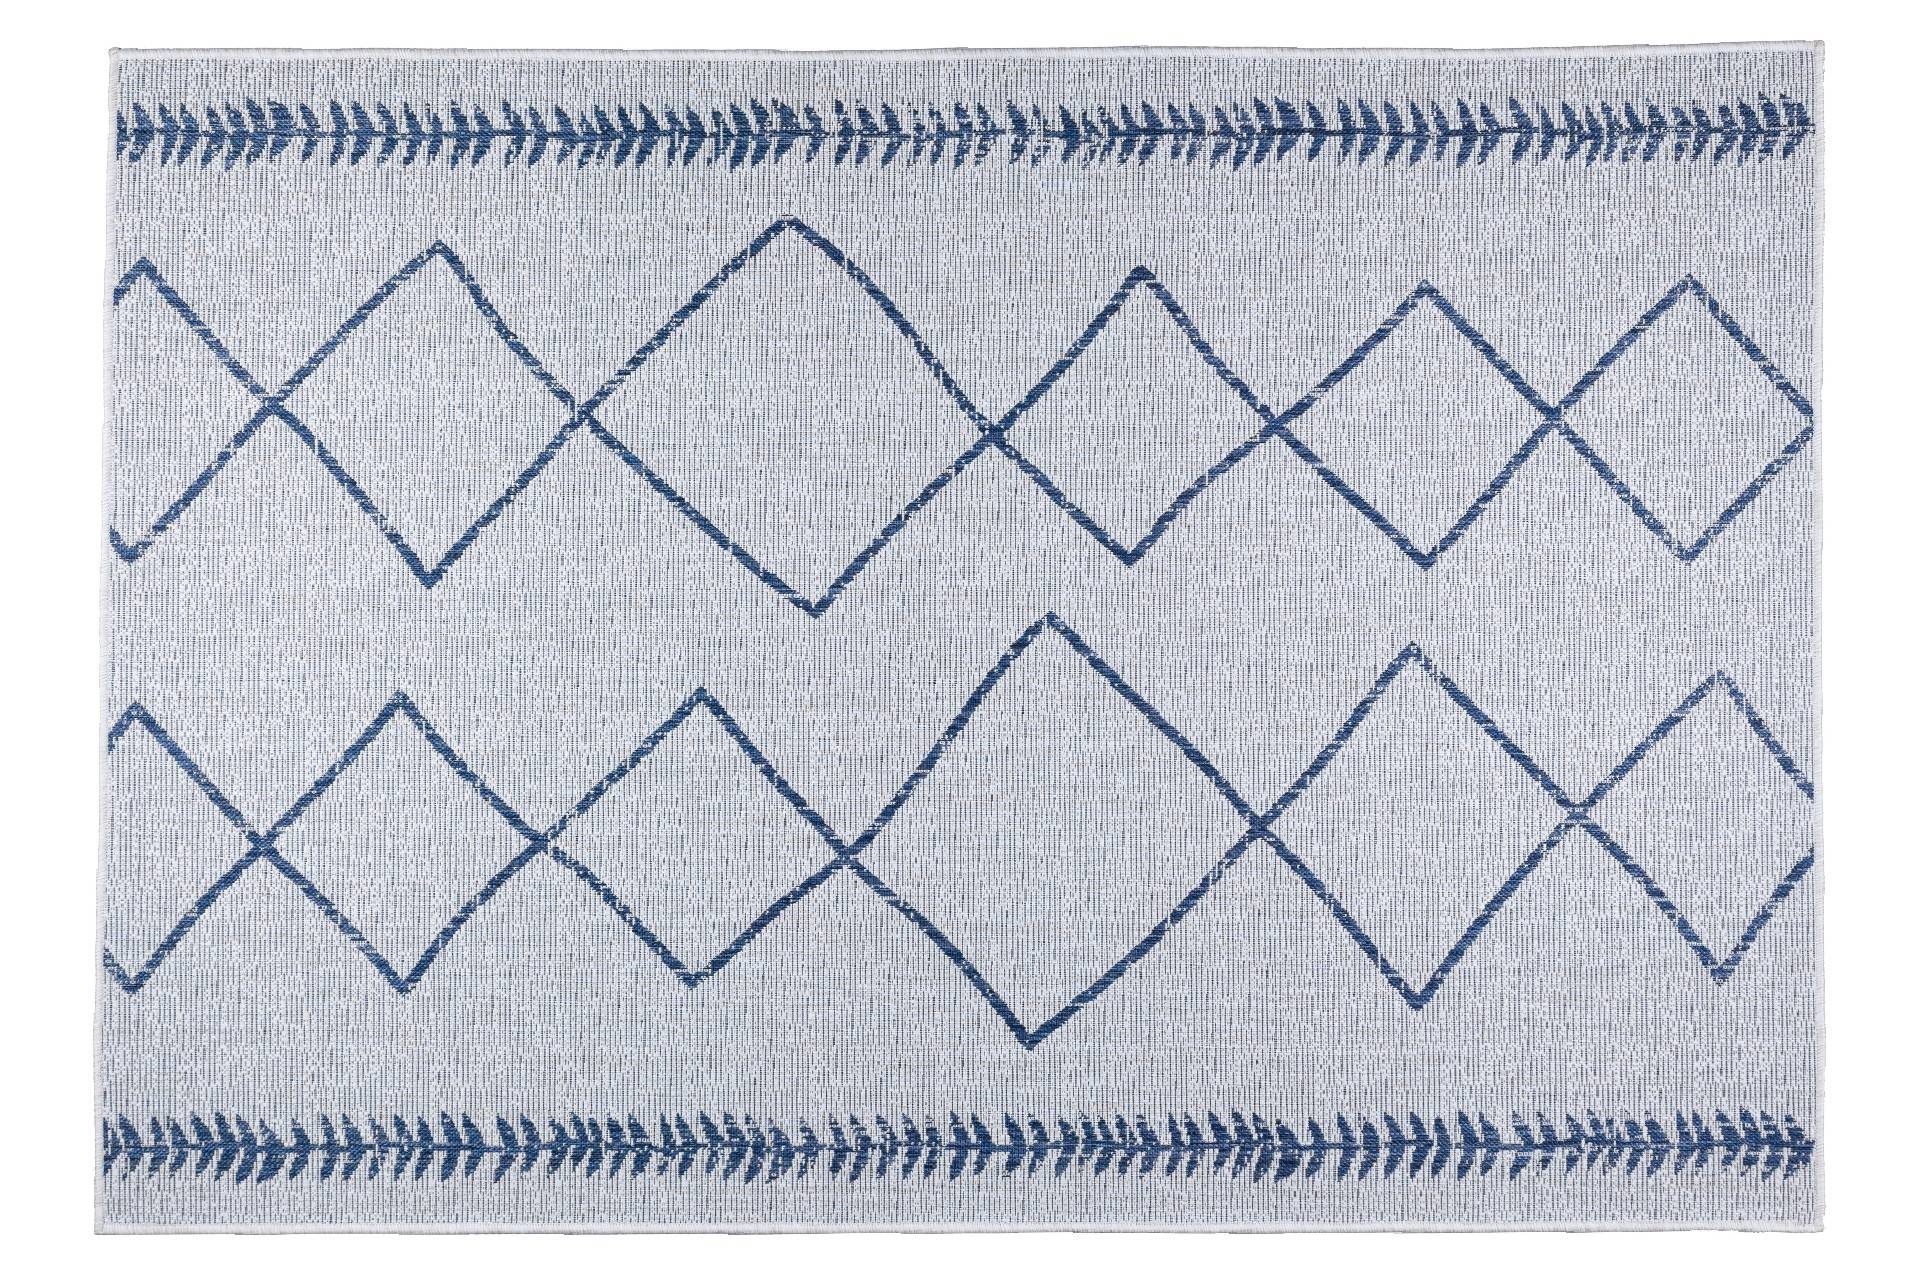 Tawri Vloerkleed 160x230cm Abstract Geometrisch Patroon Marine Blauw